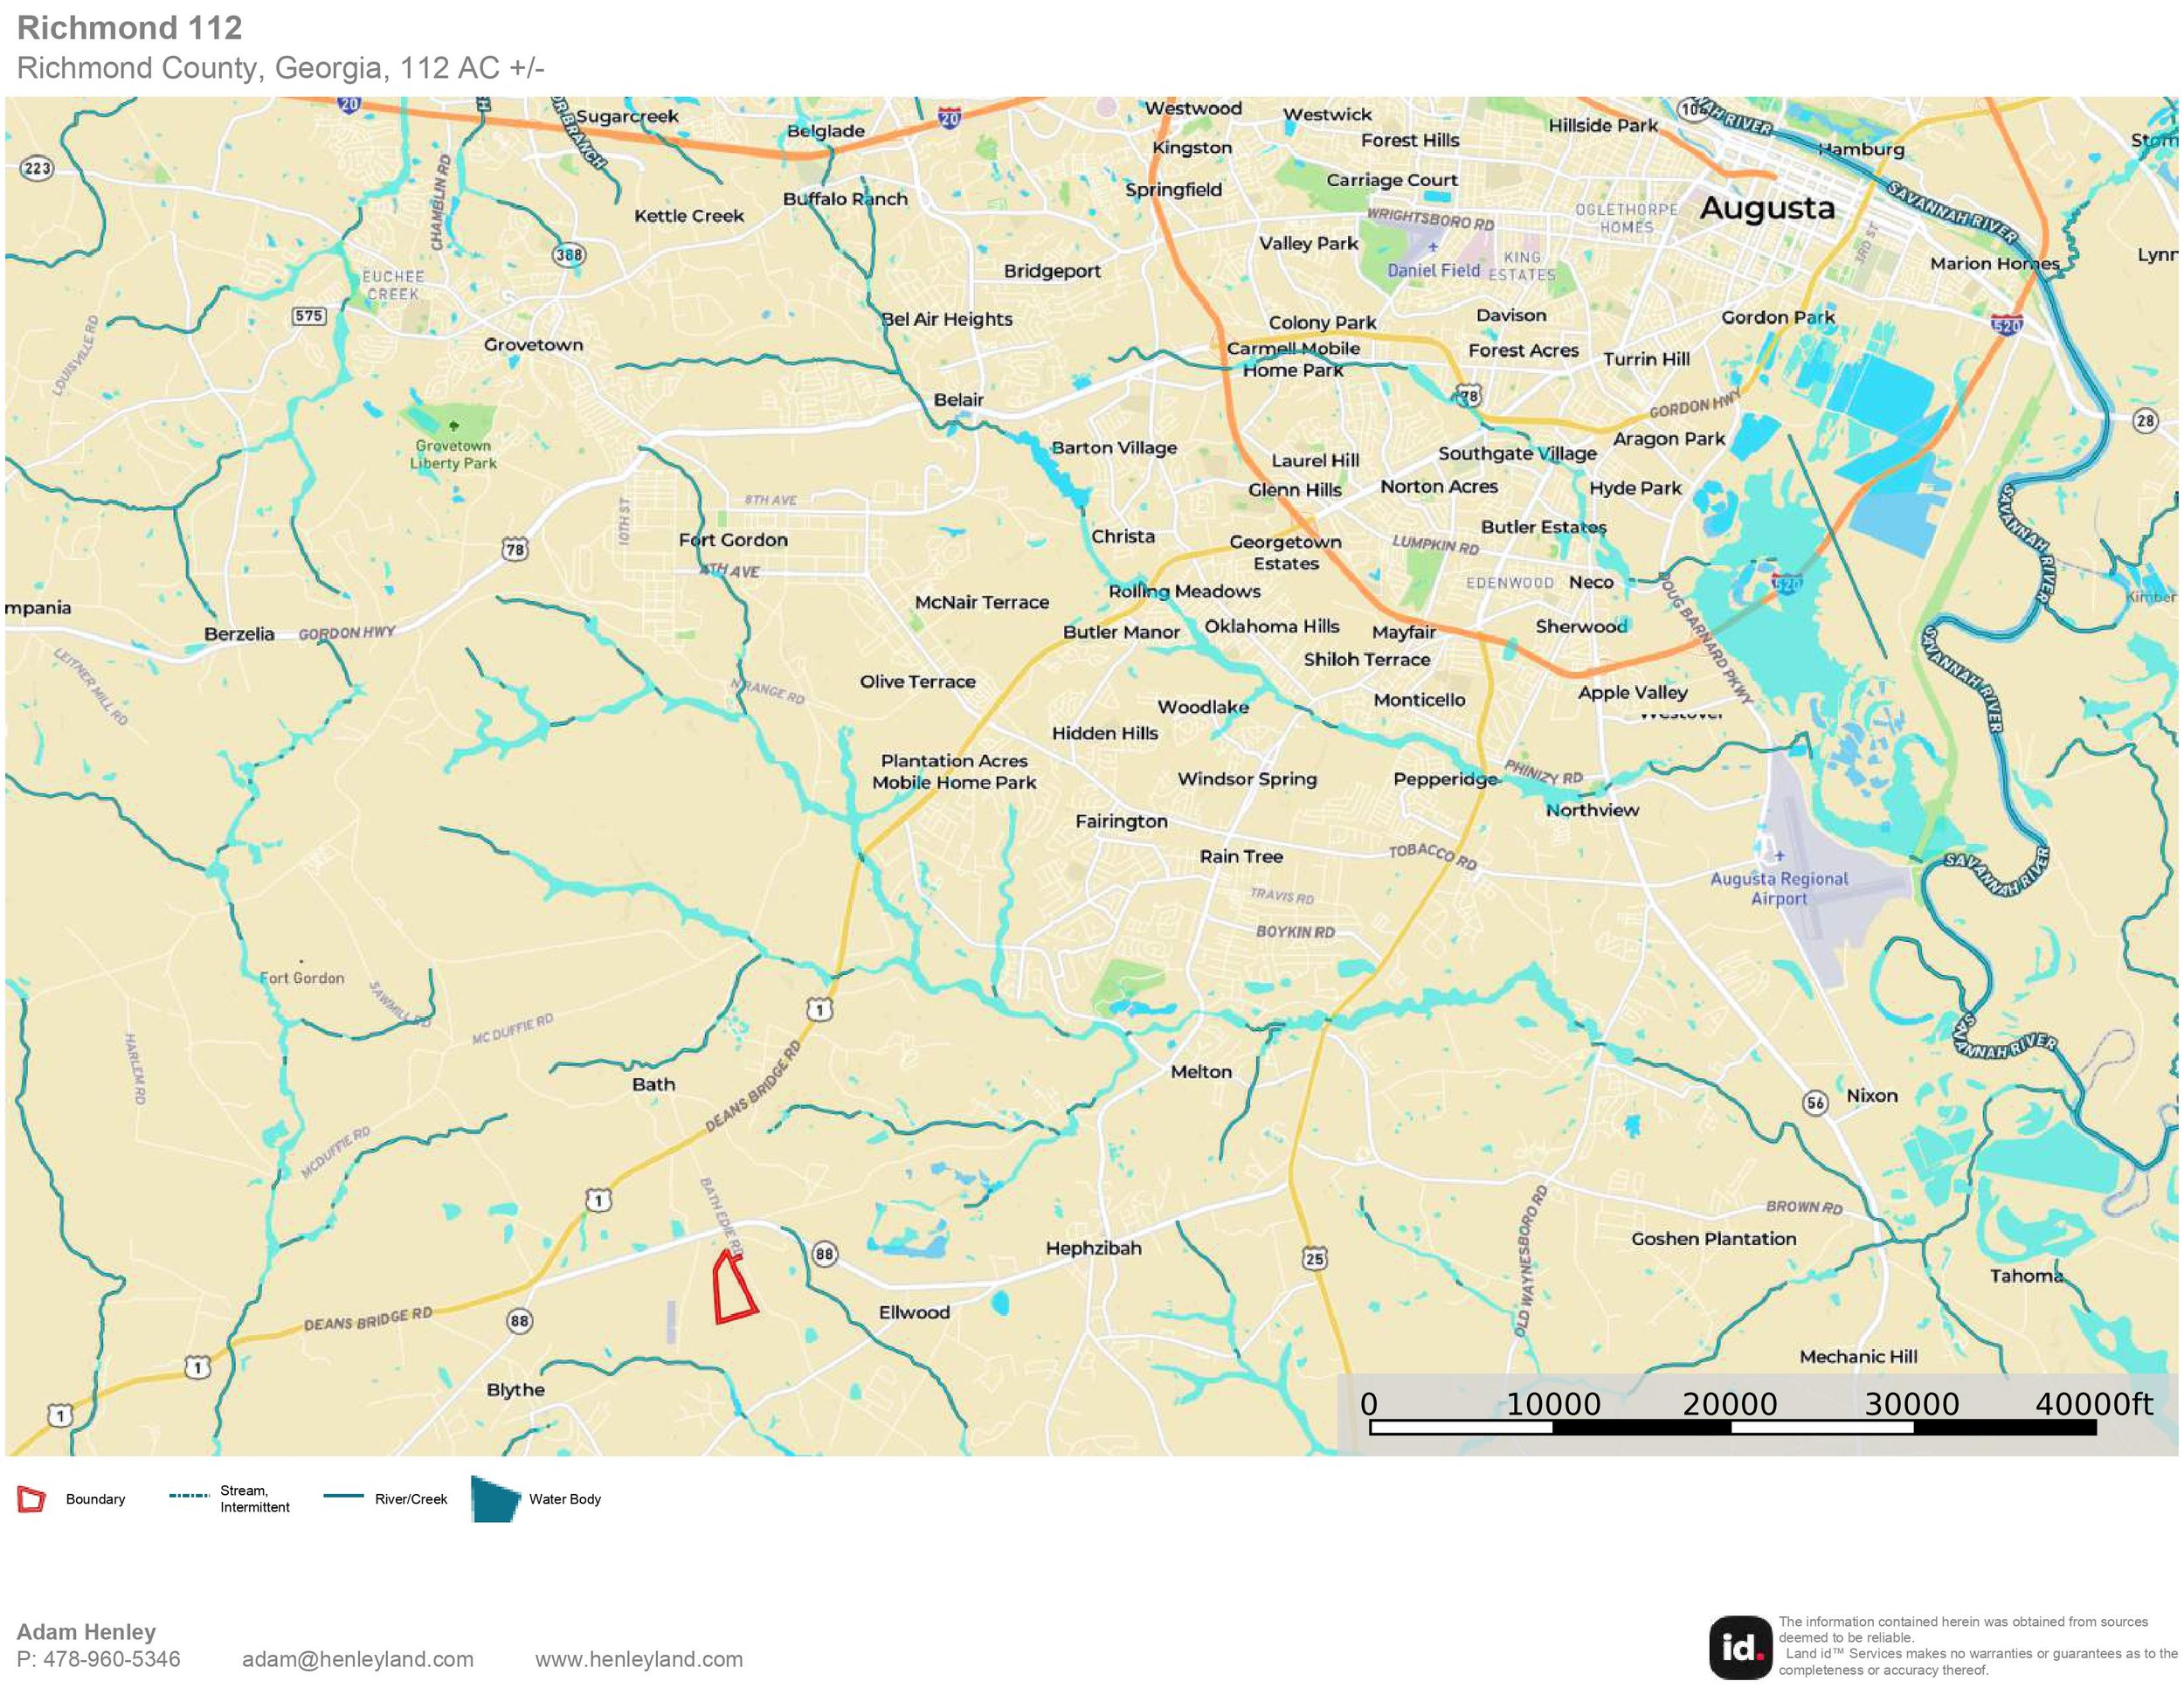 Richmond 112 - Location Map.jpg